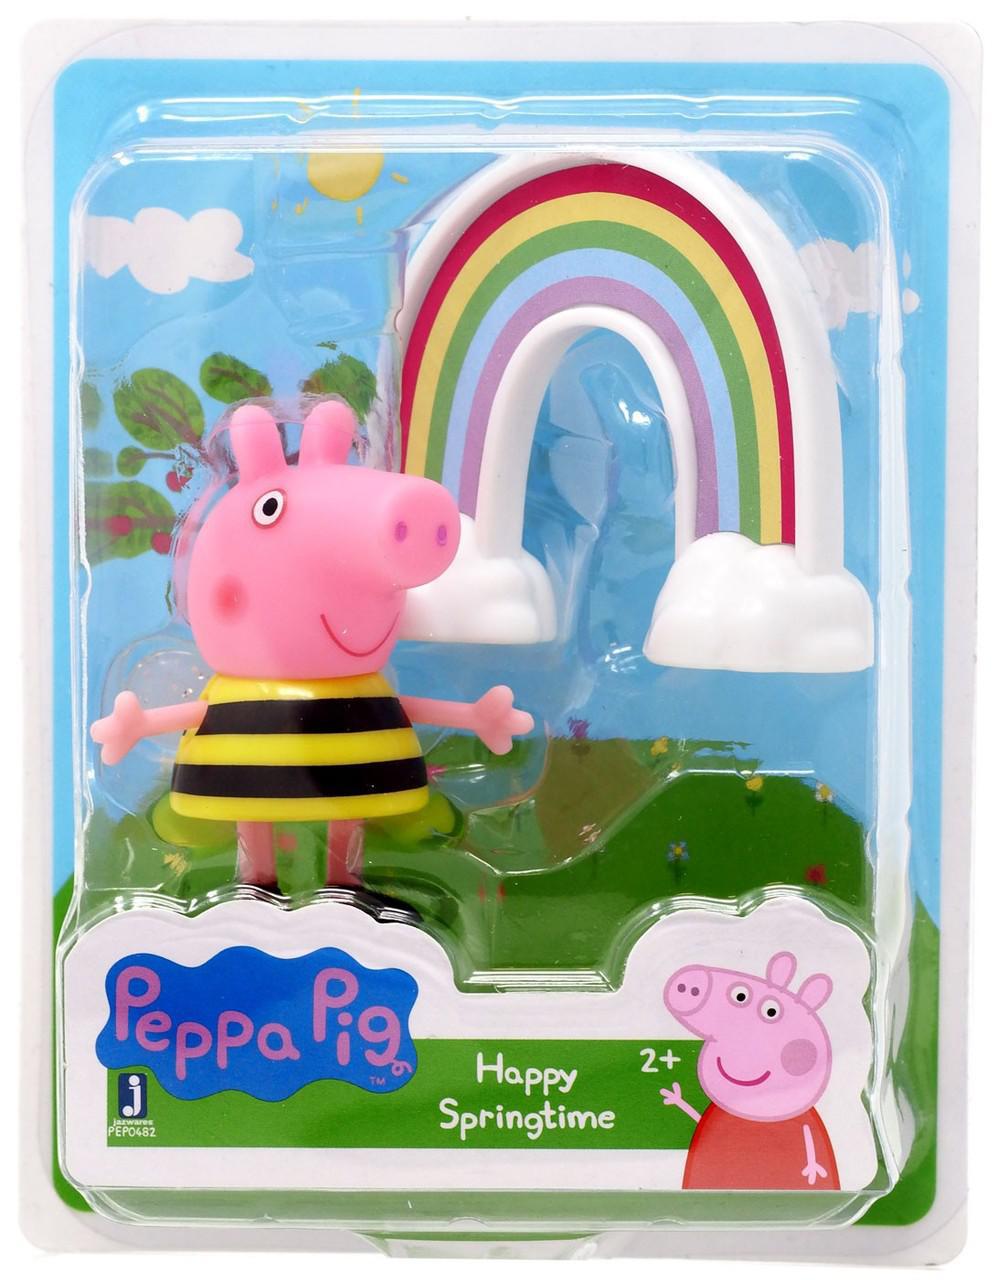 World of Peppa Pig Friends, Limited Edition Peppa pig Articulated Mini Figures Assortment (1Pcs)